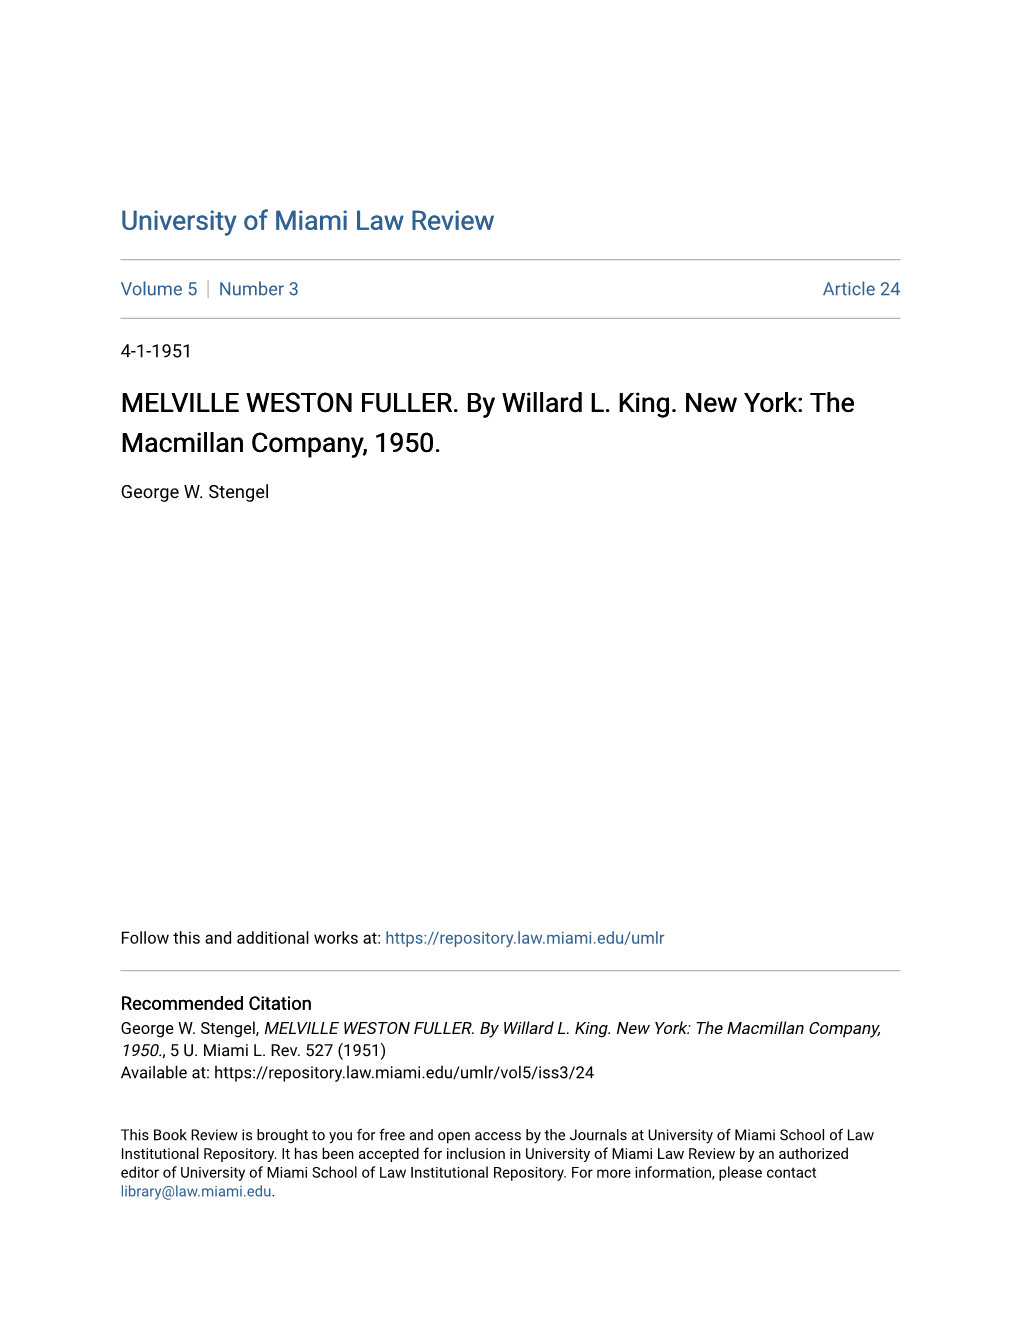 MELVILLE WESTON FULLER. by Willard L. King. New York: the Macmillan Company, 1950